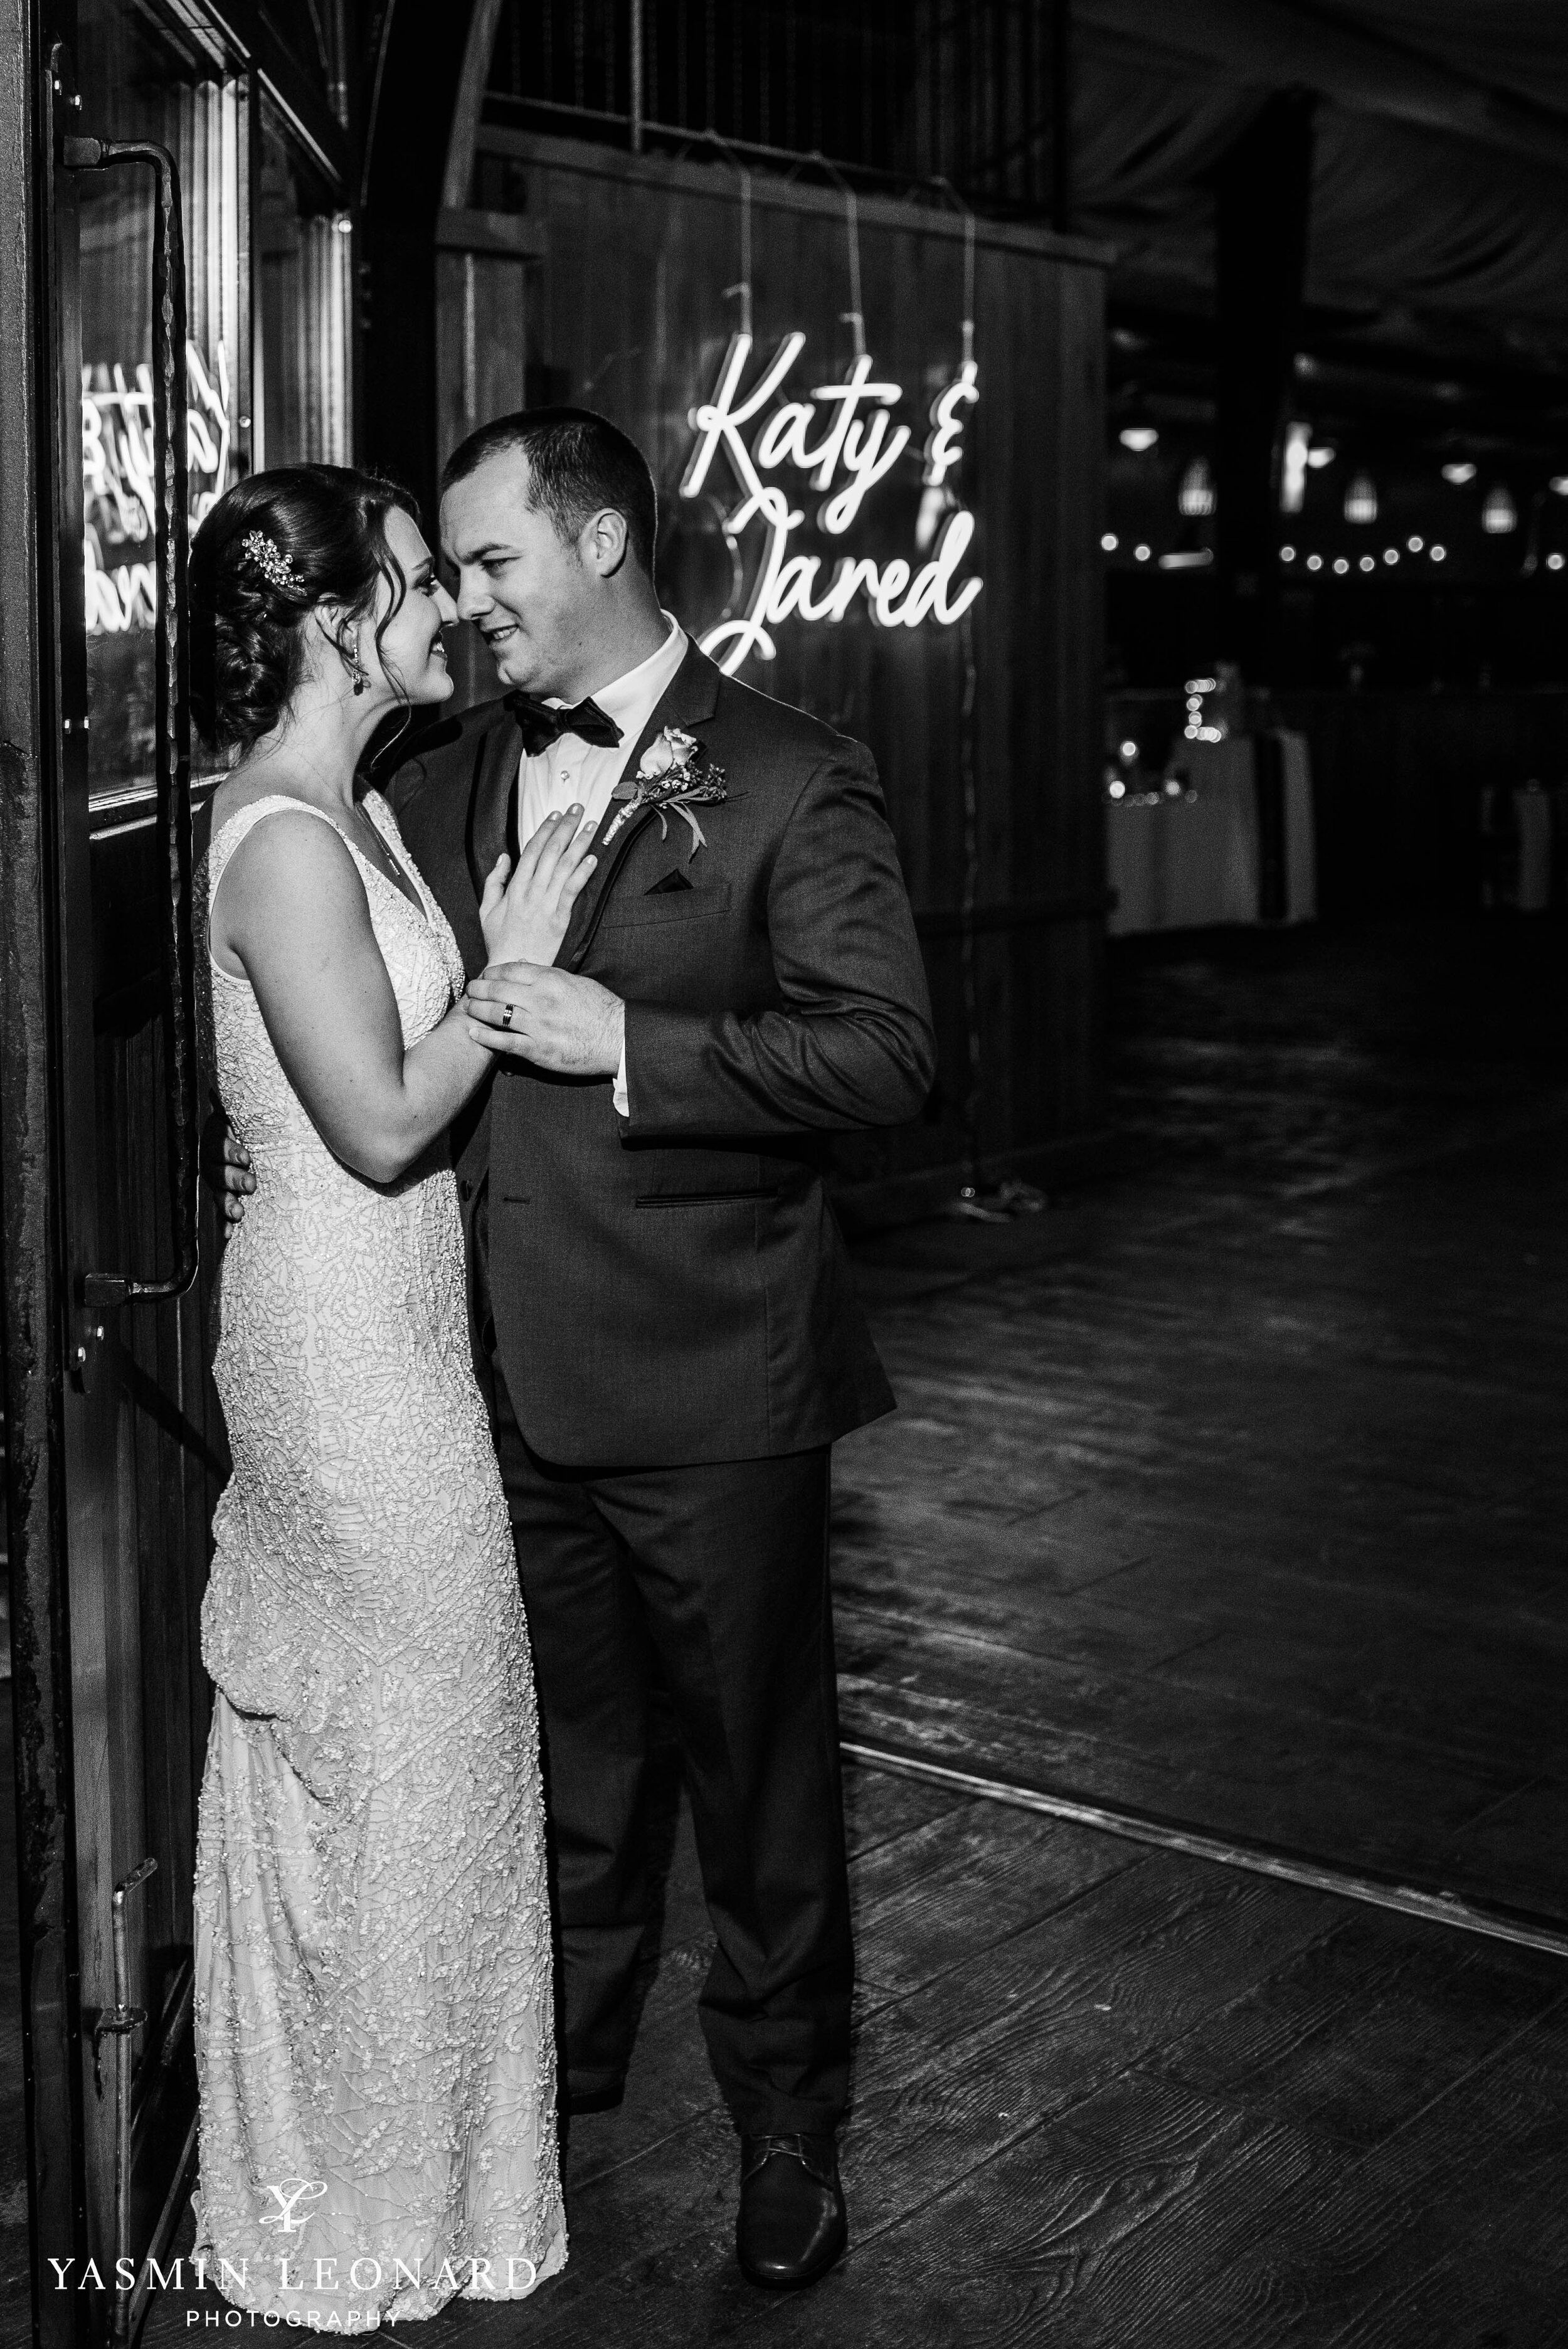 Jared and Katy - Adaumont Farms - High Point Weddings - NC Barn Weddings - Yasmin Leonard Photography-50.jpg